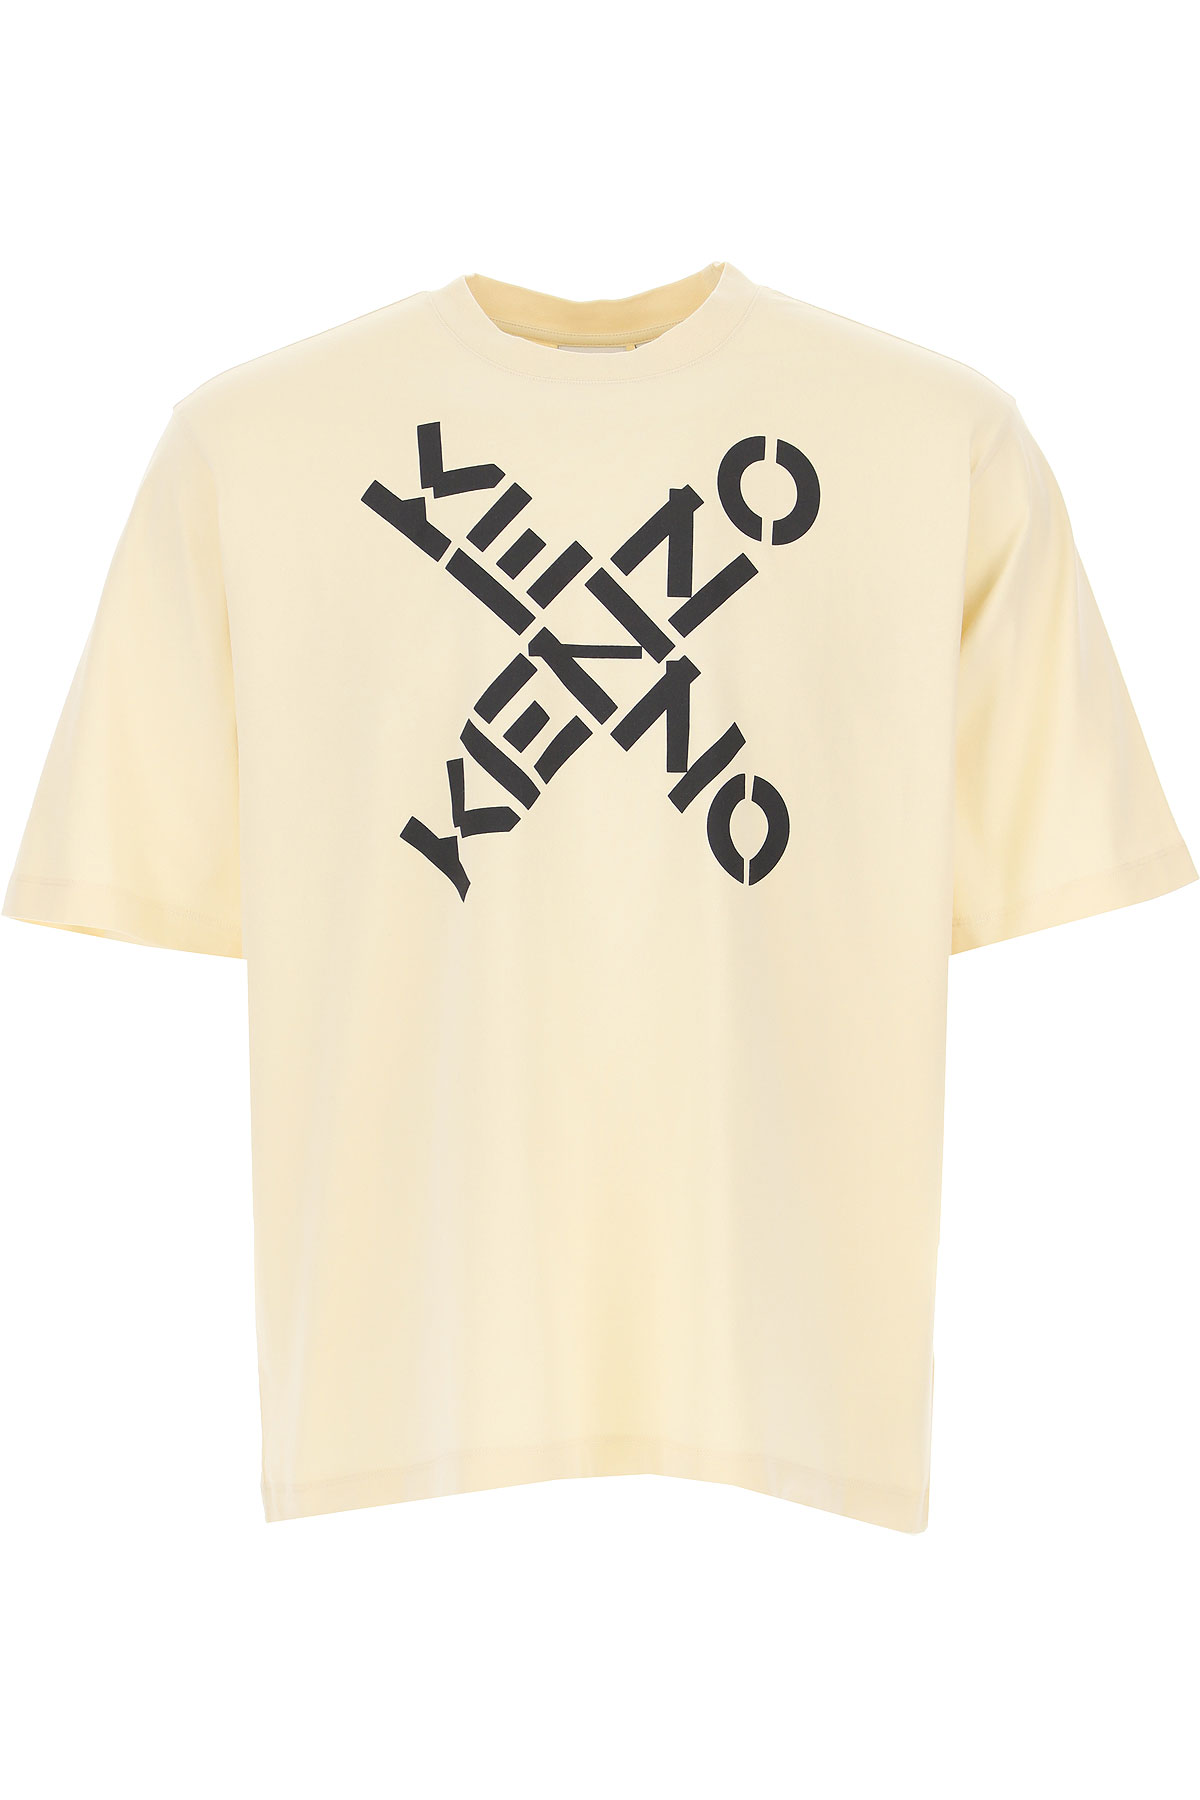 kenzo t shirt 2019